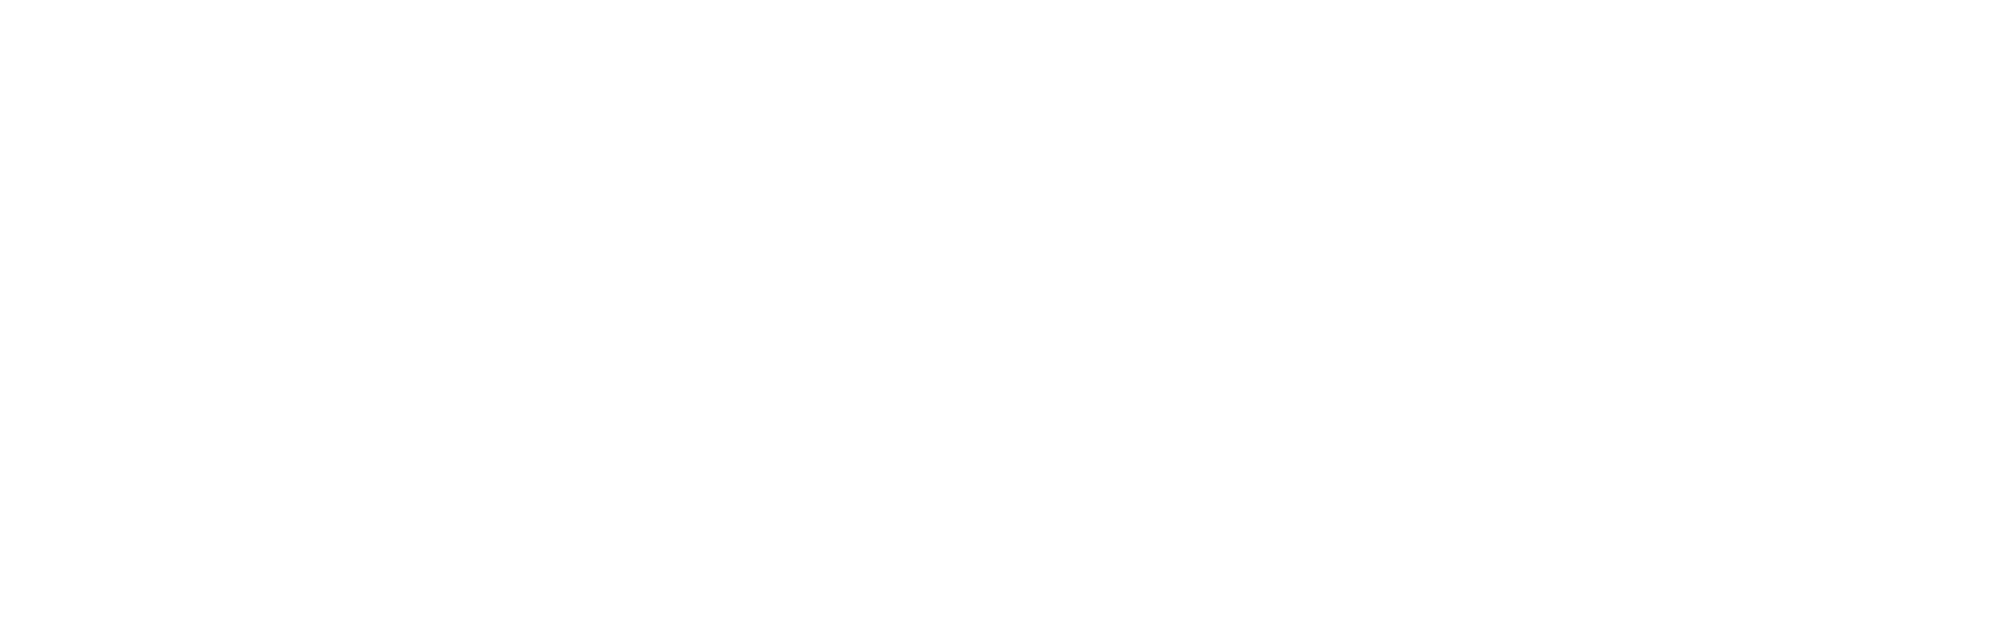 Movistar Riders Logo